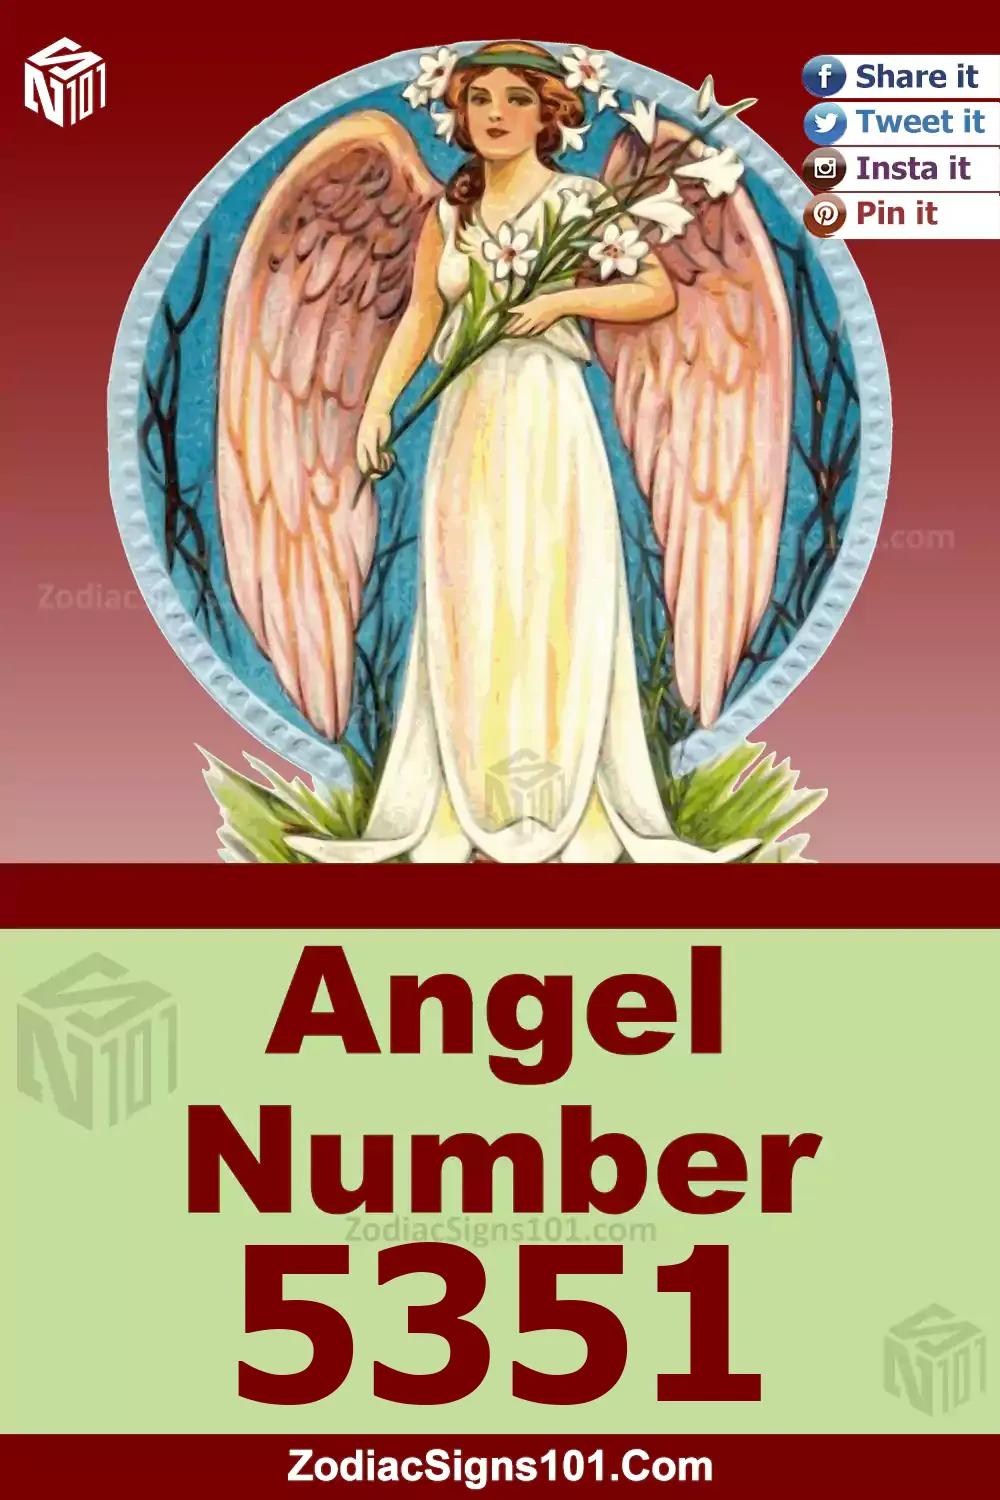 5351-Angel-Number-Meaning.jpg